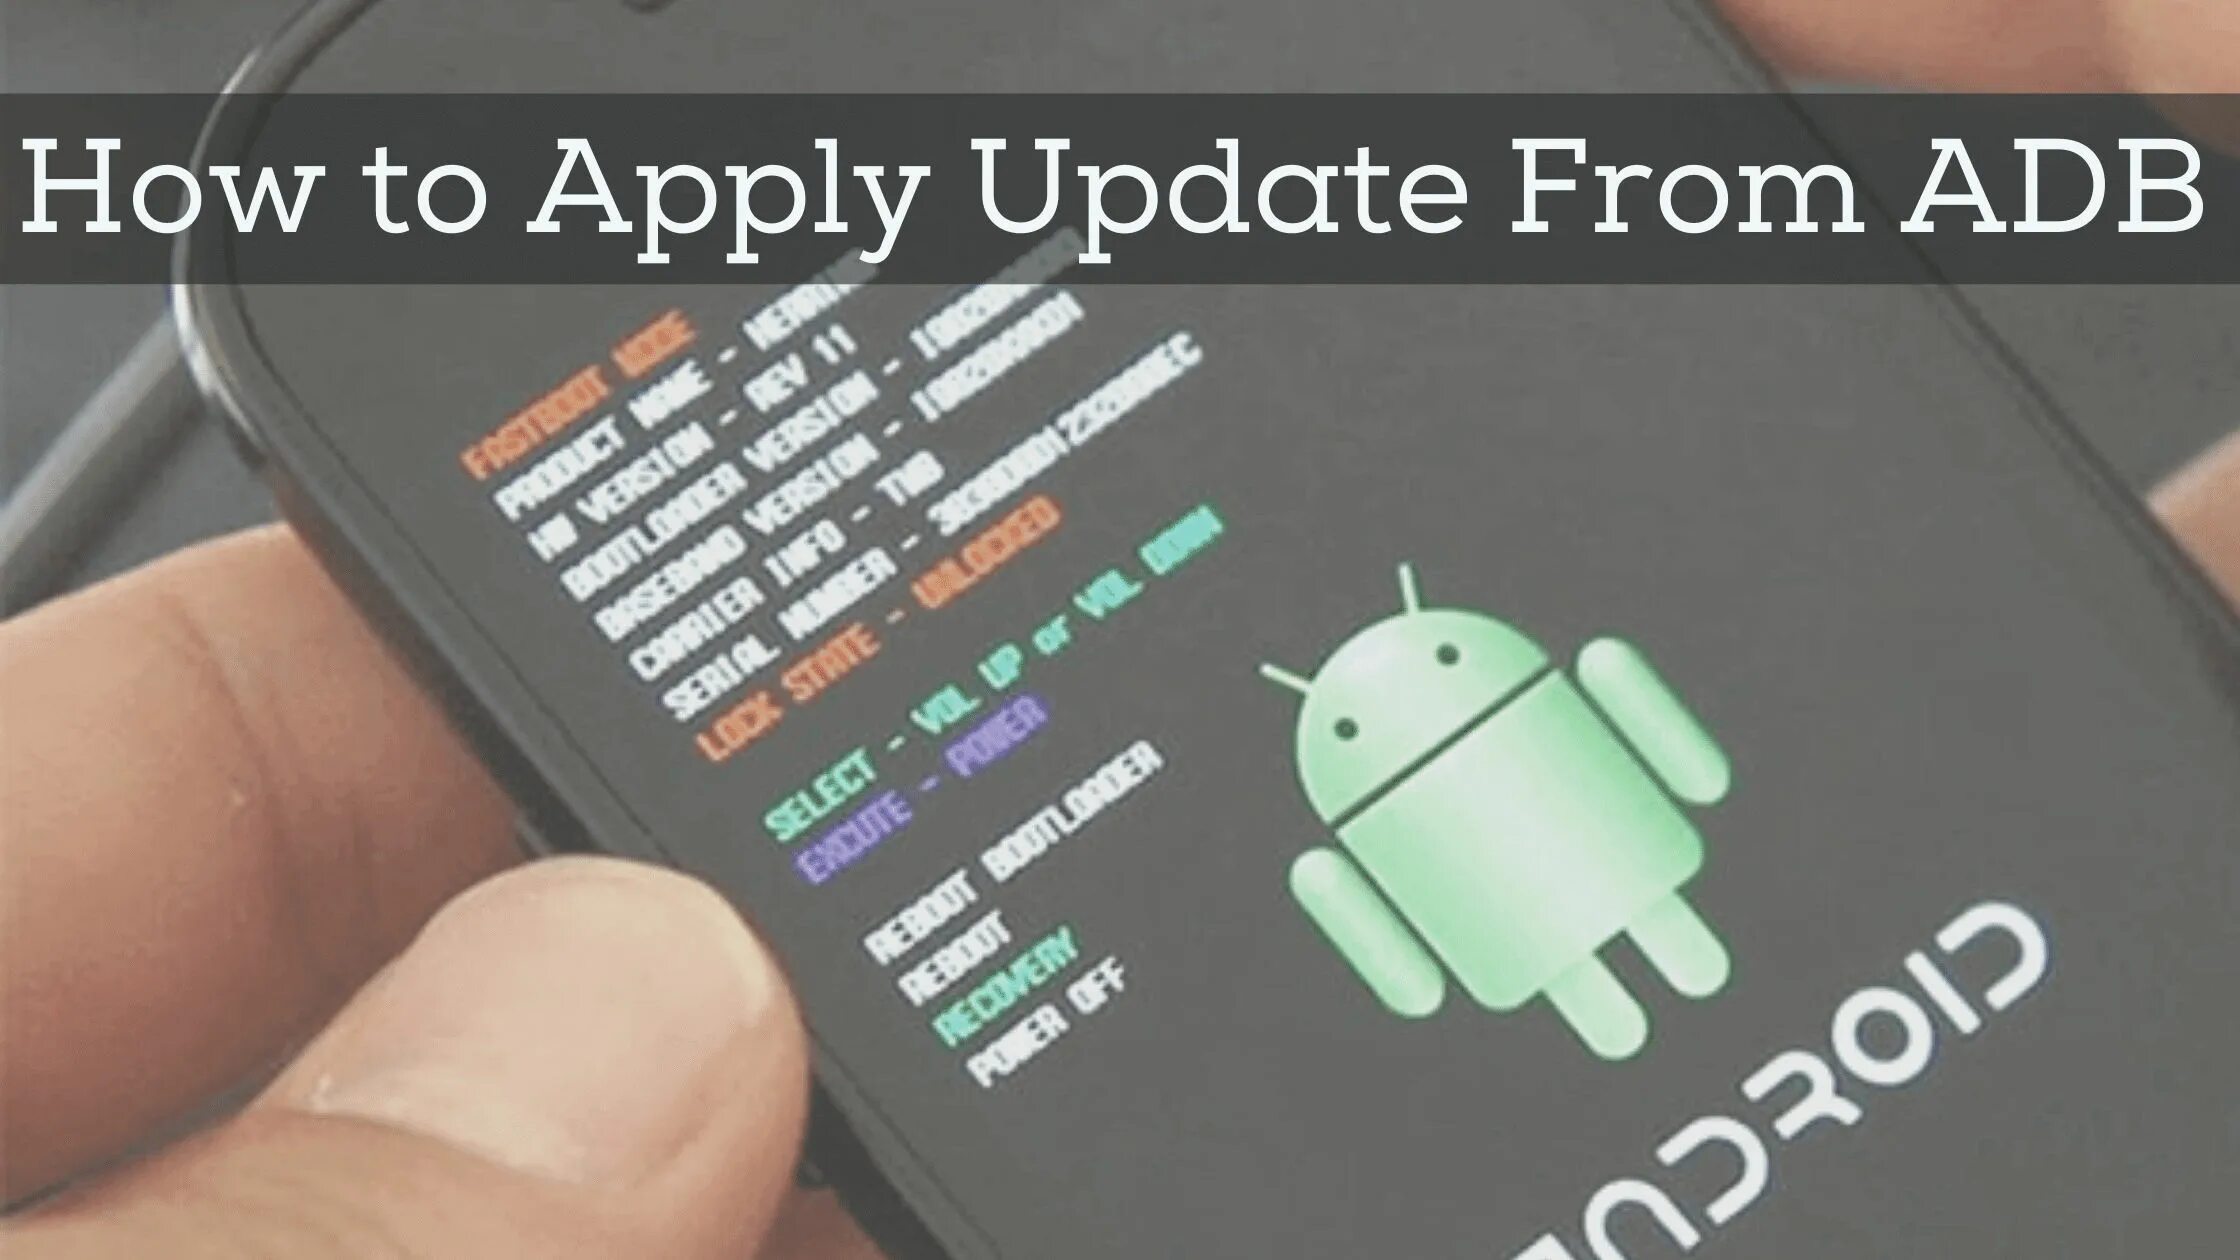 ADB В рекавери. Android debug Bridge. Обновление андроид. Apply update.